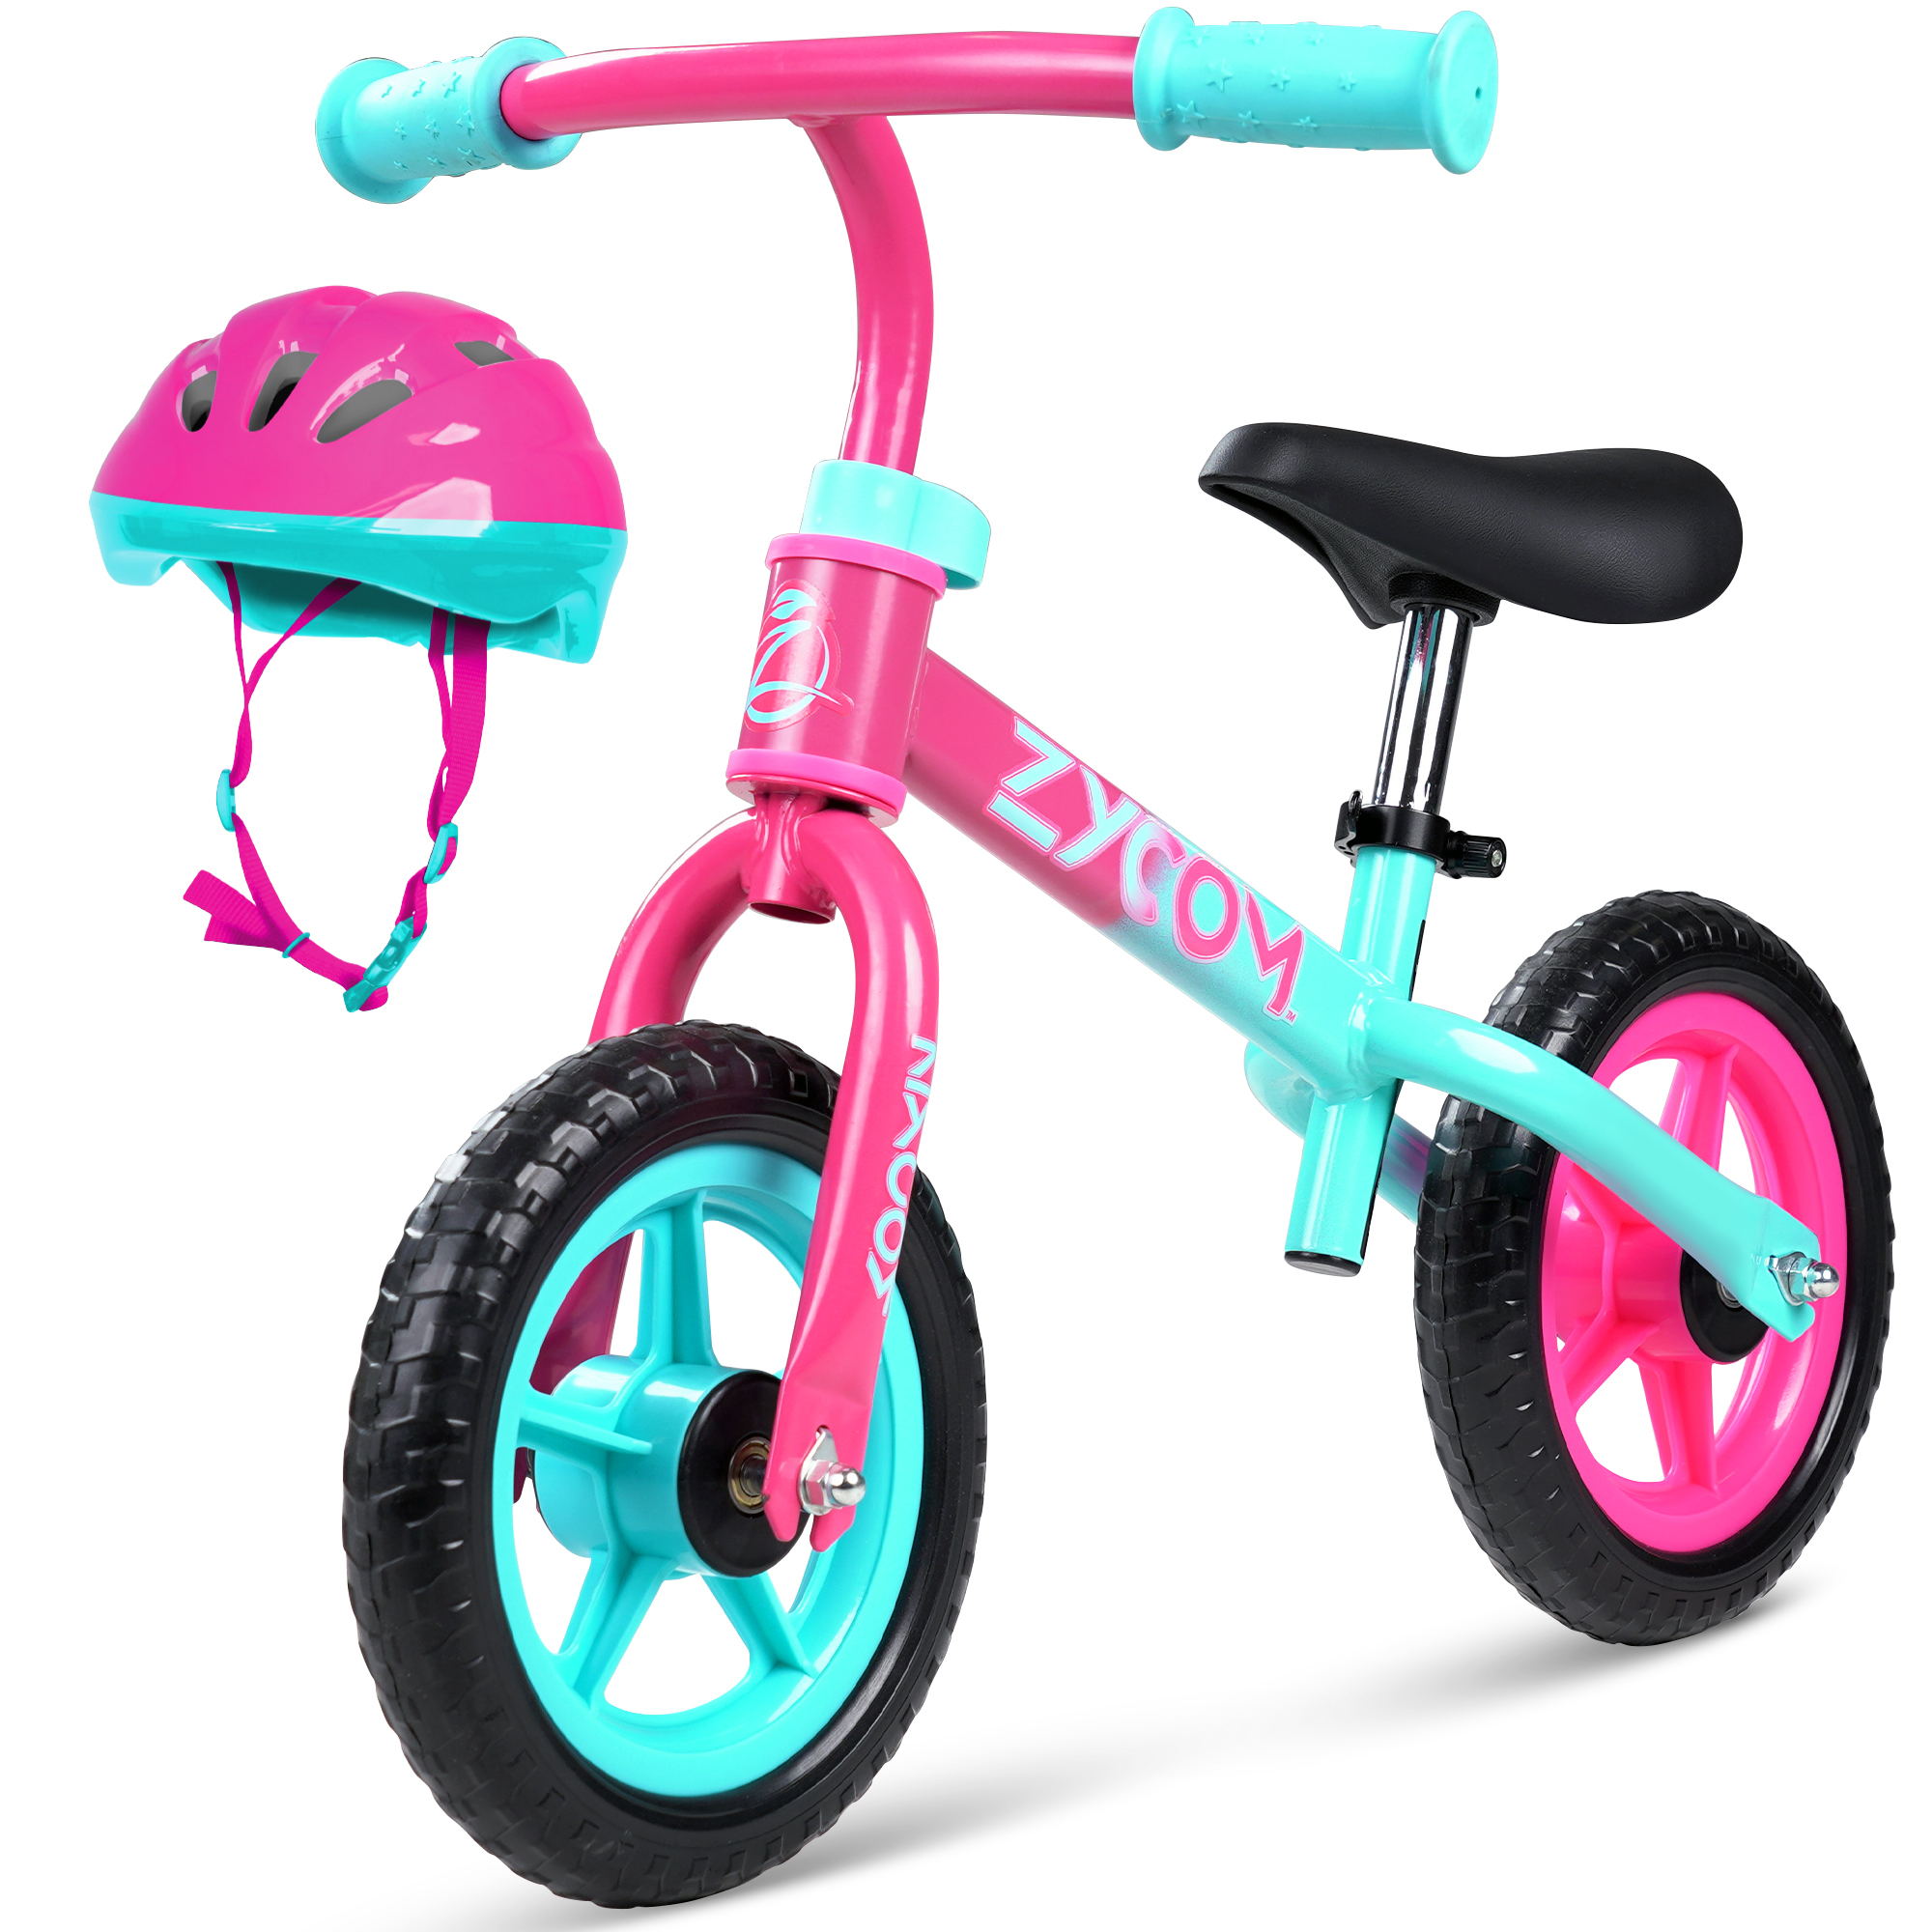 Zycom 10-inch Toddlers Balance Bike Adjustable Helmet Airless Wheels Lightweight Training Bike Pink - image 1 of 11